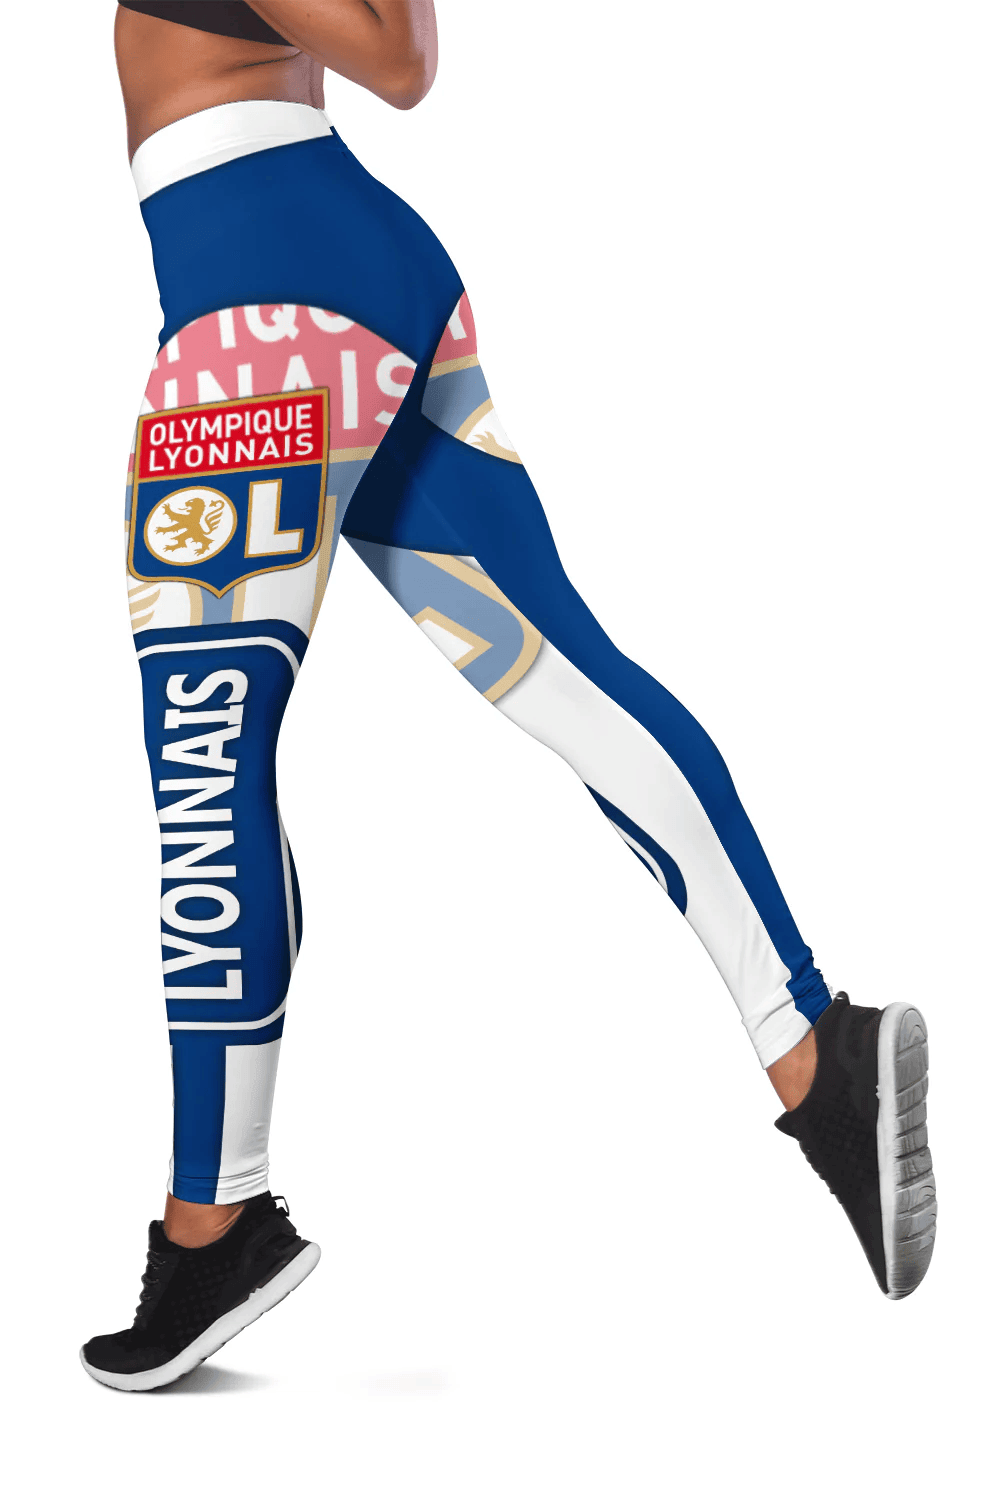 Olympique Lyonnais New Legging Style